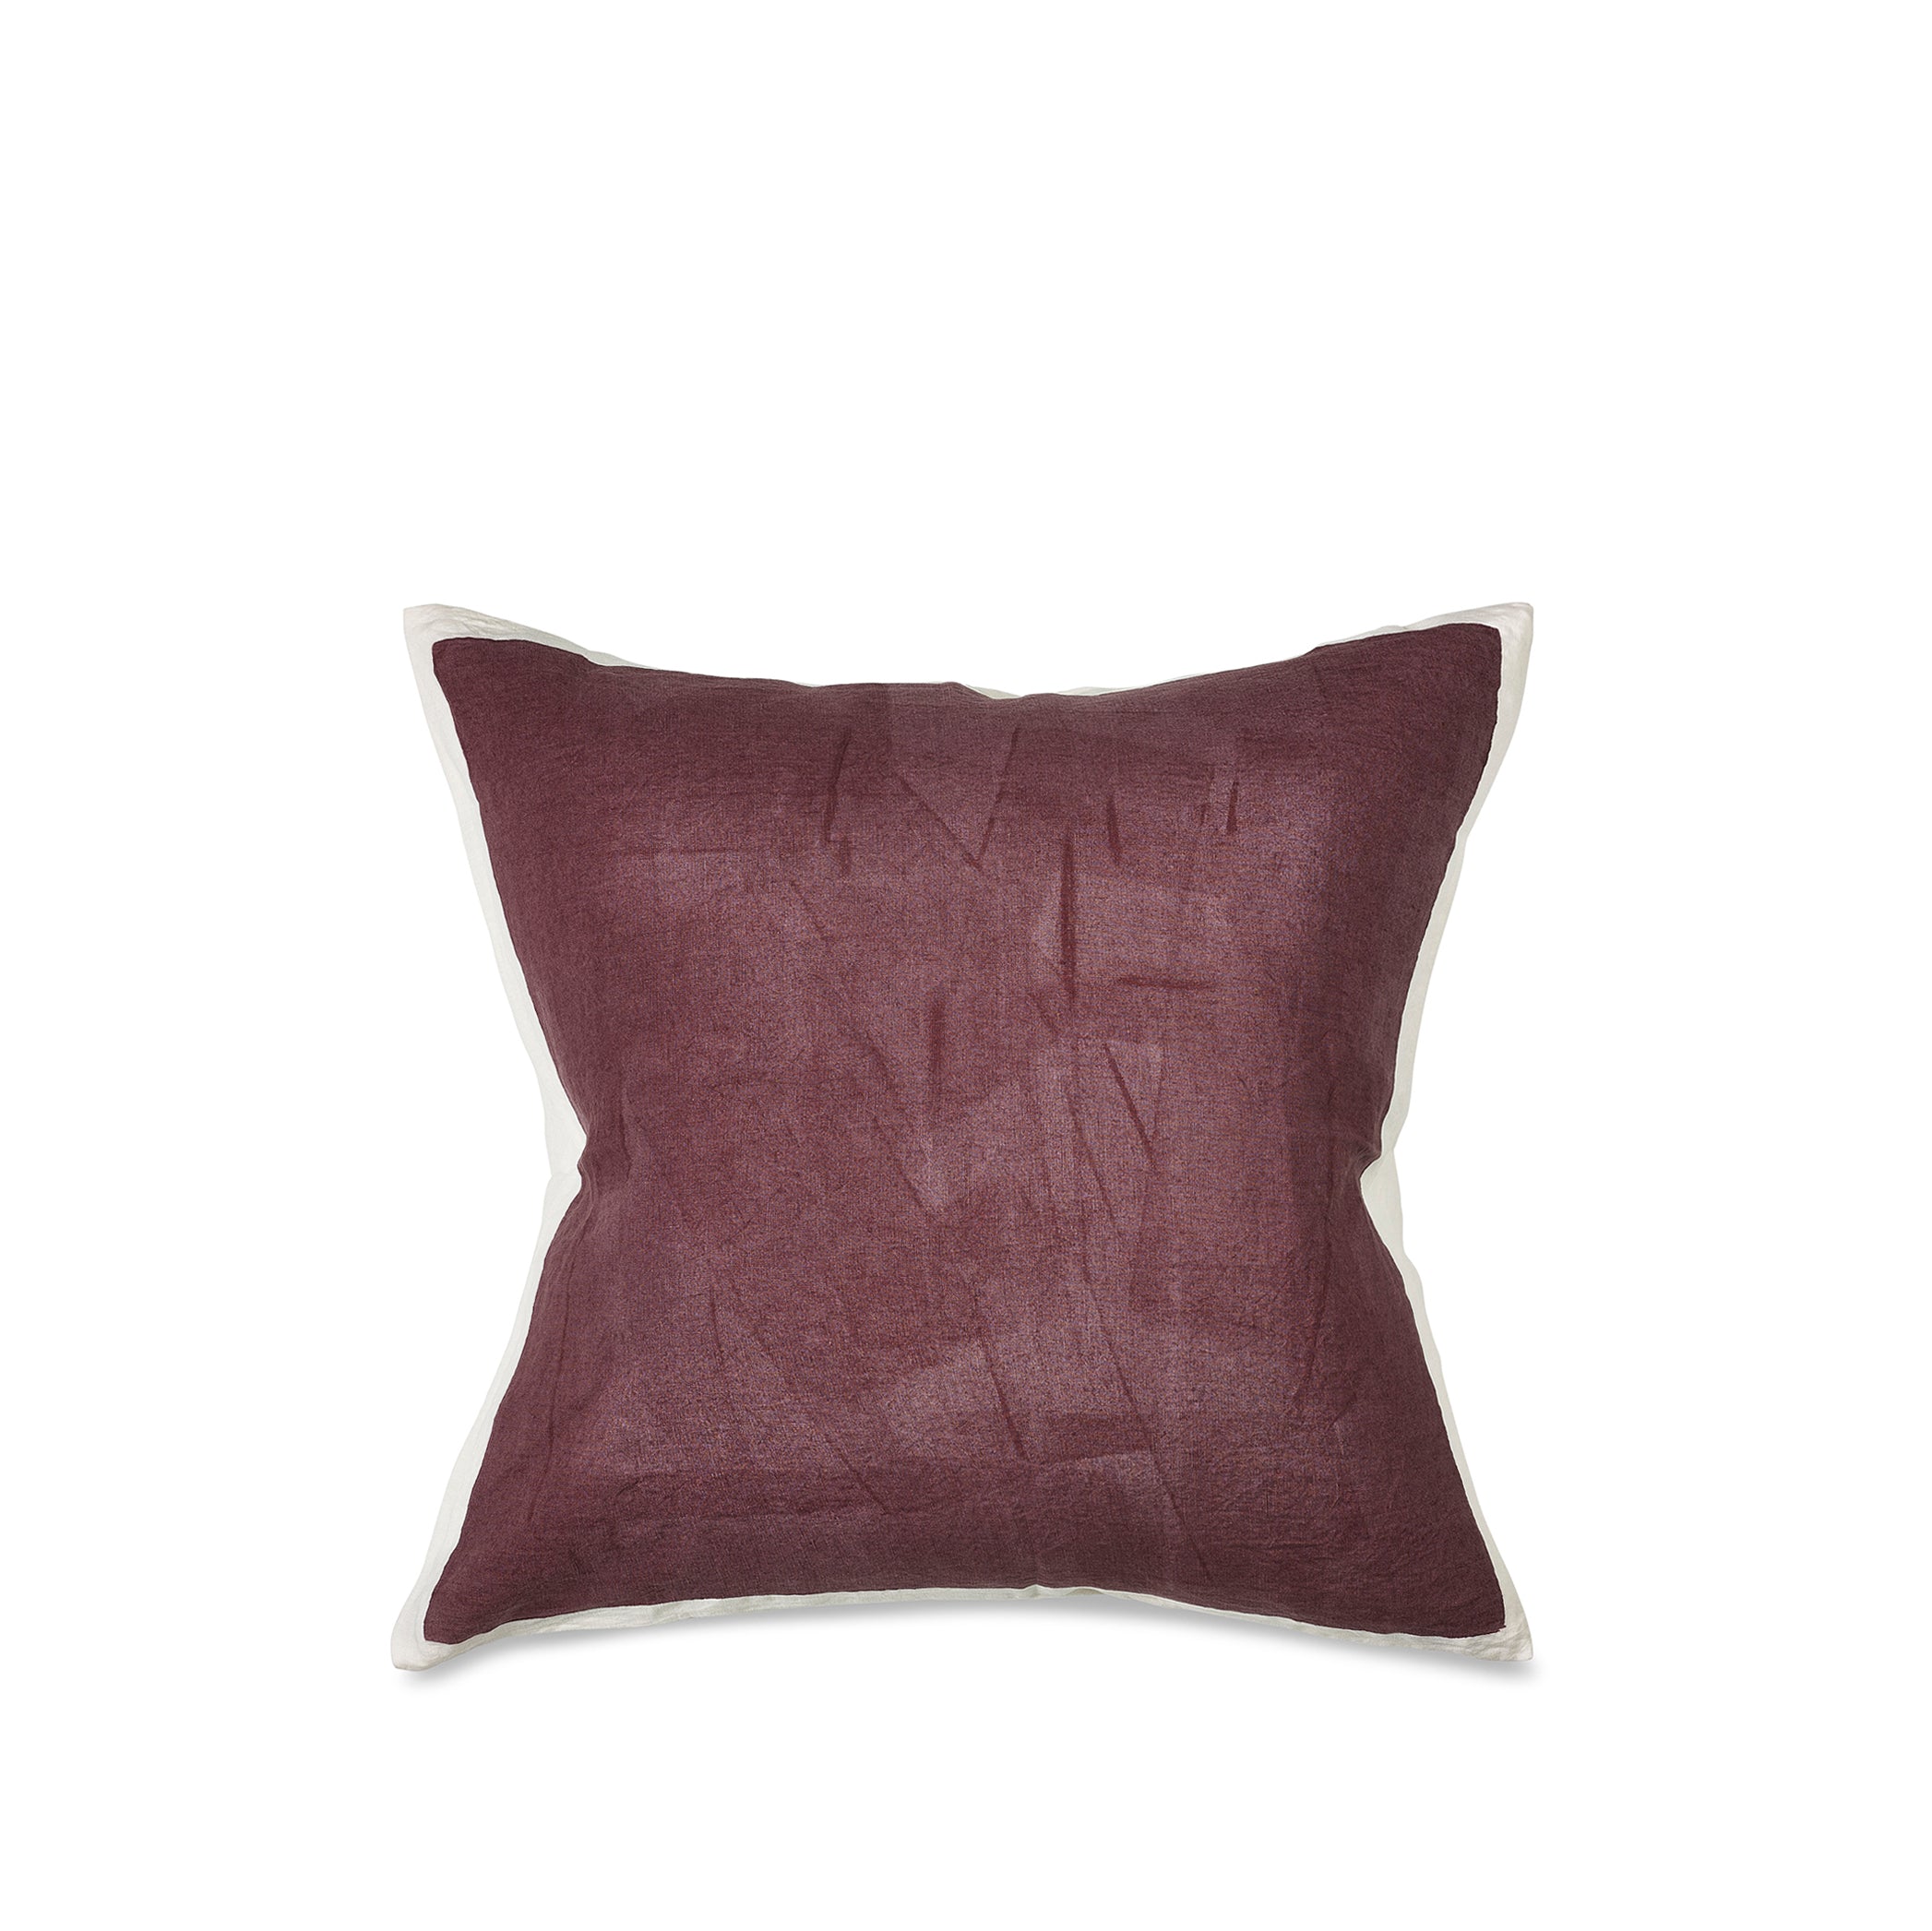 Hand Painted Linen Cushion in Grape, 60cm x 60cm